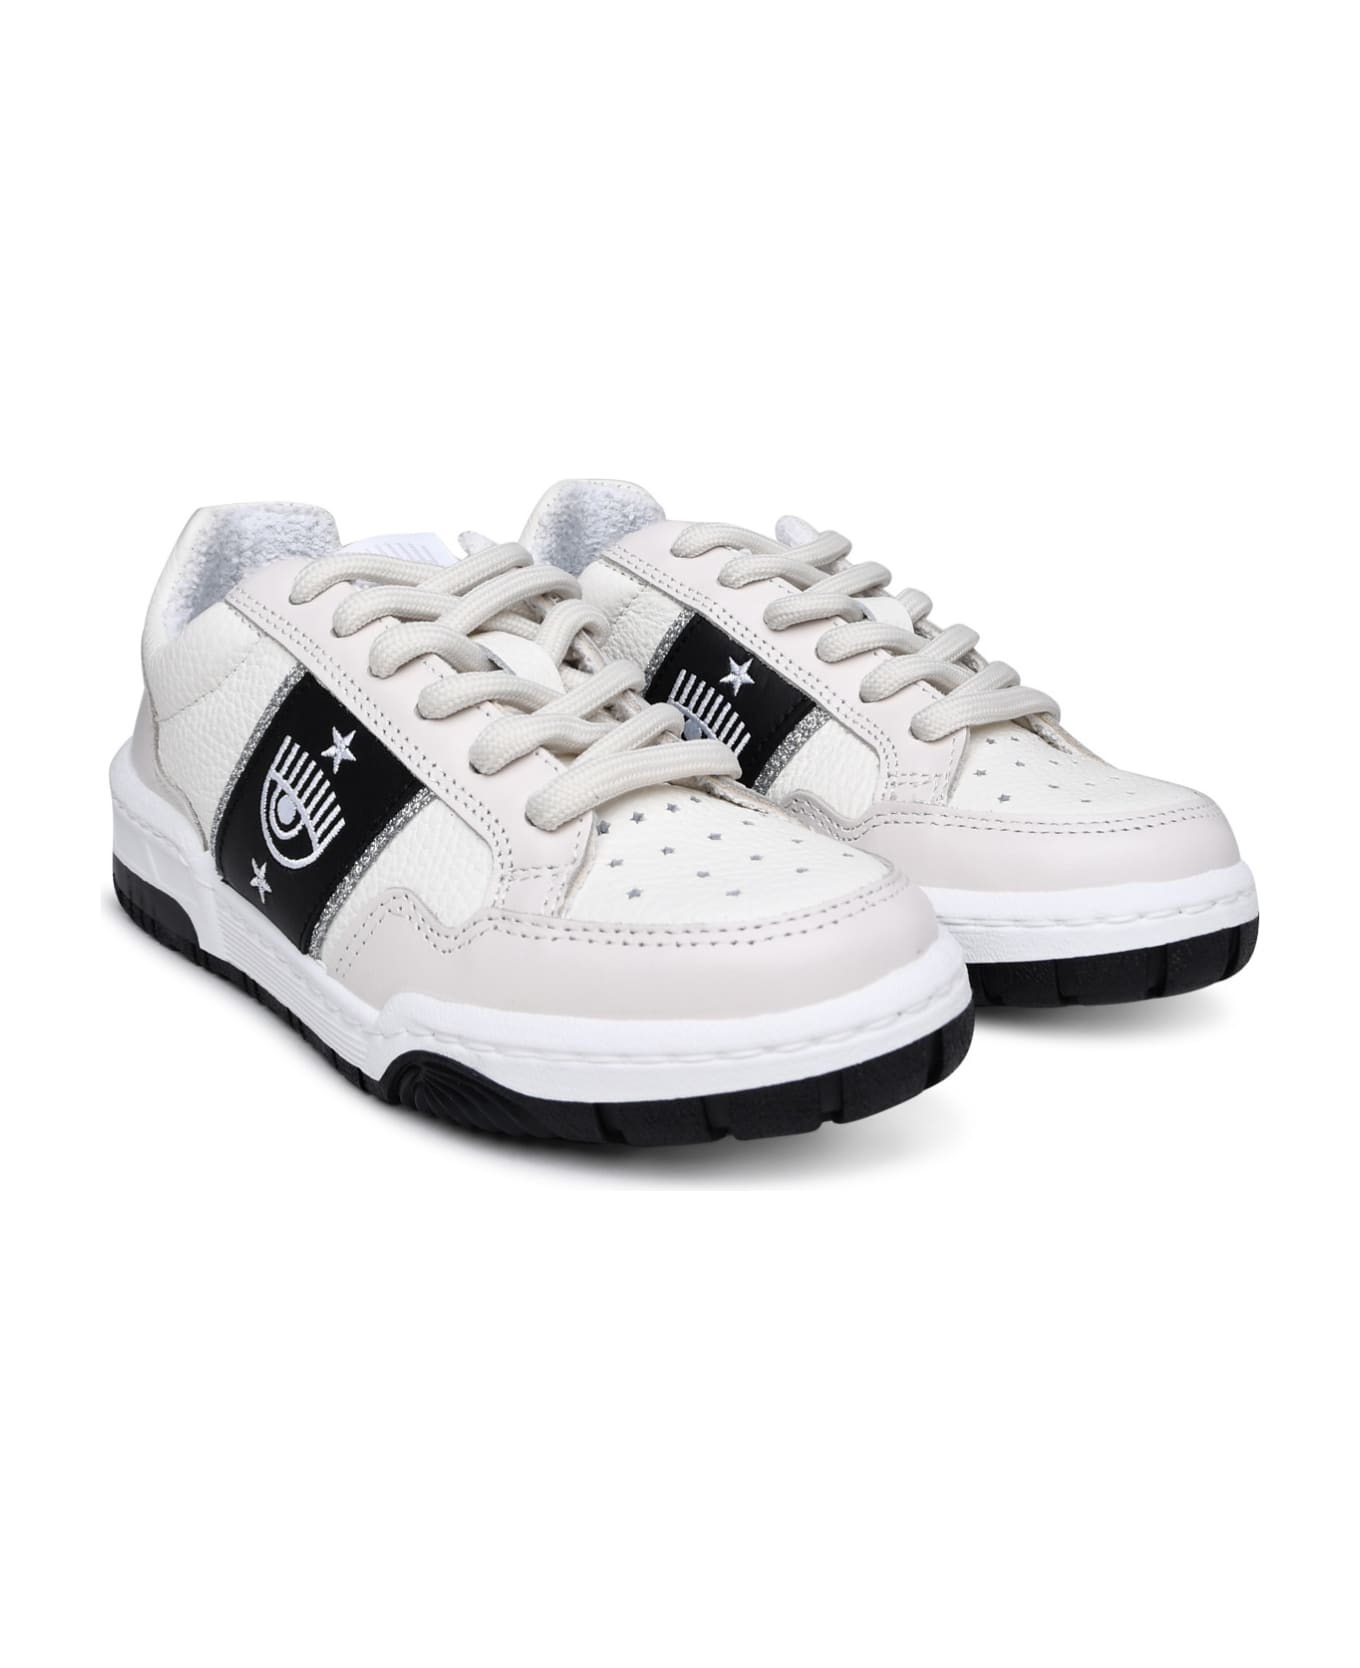 Chiara Ferragni Cf1 White Leather Sneakers - White